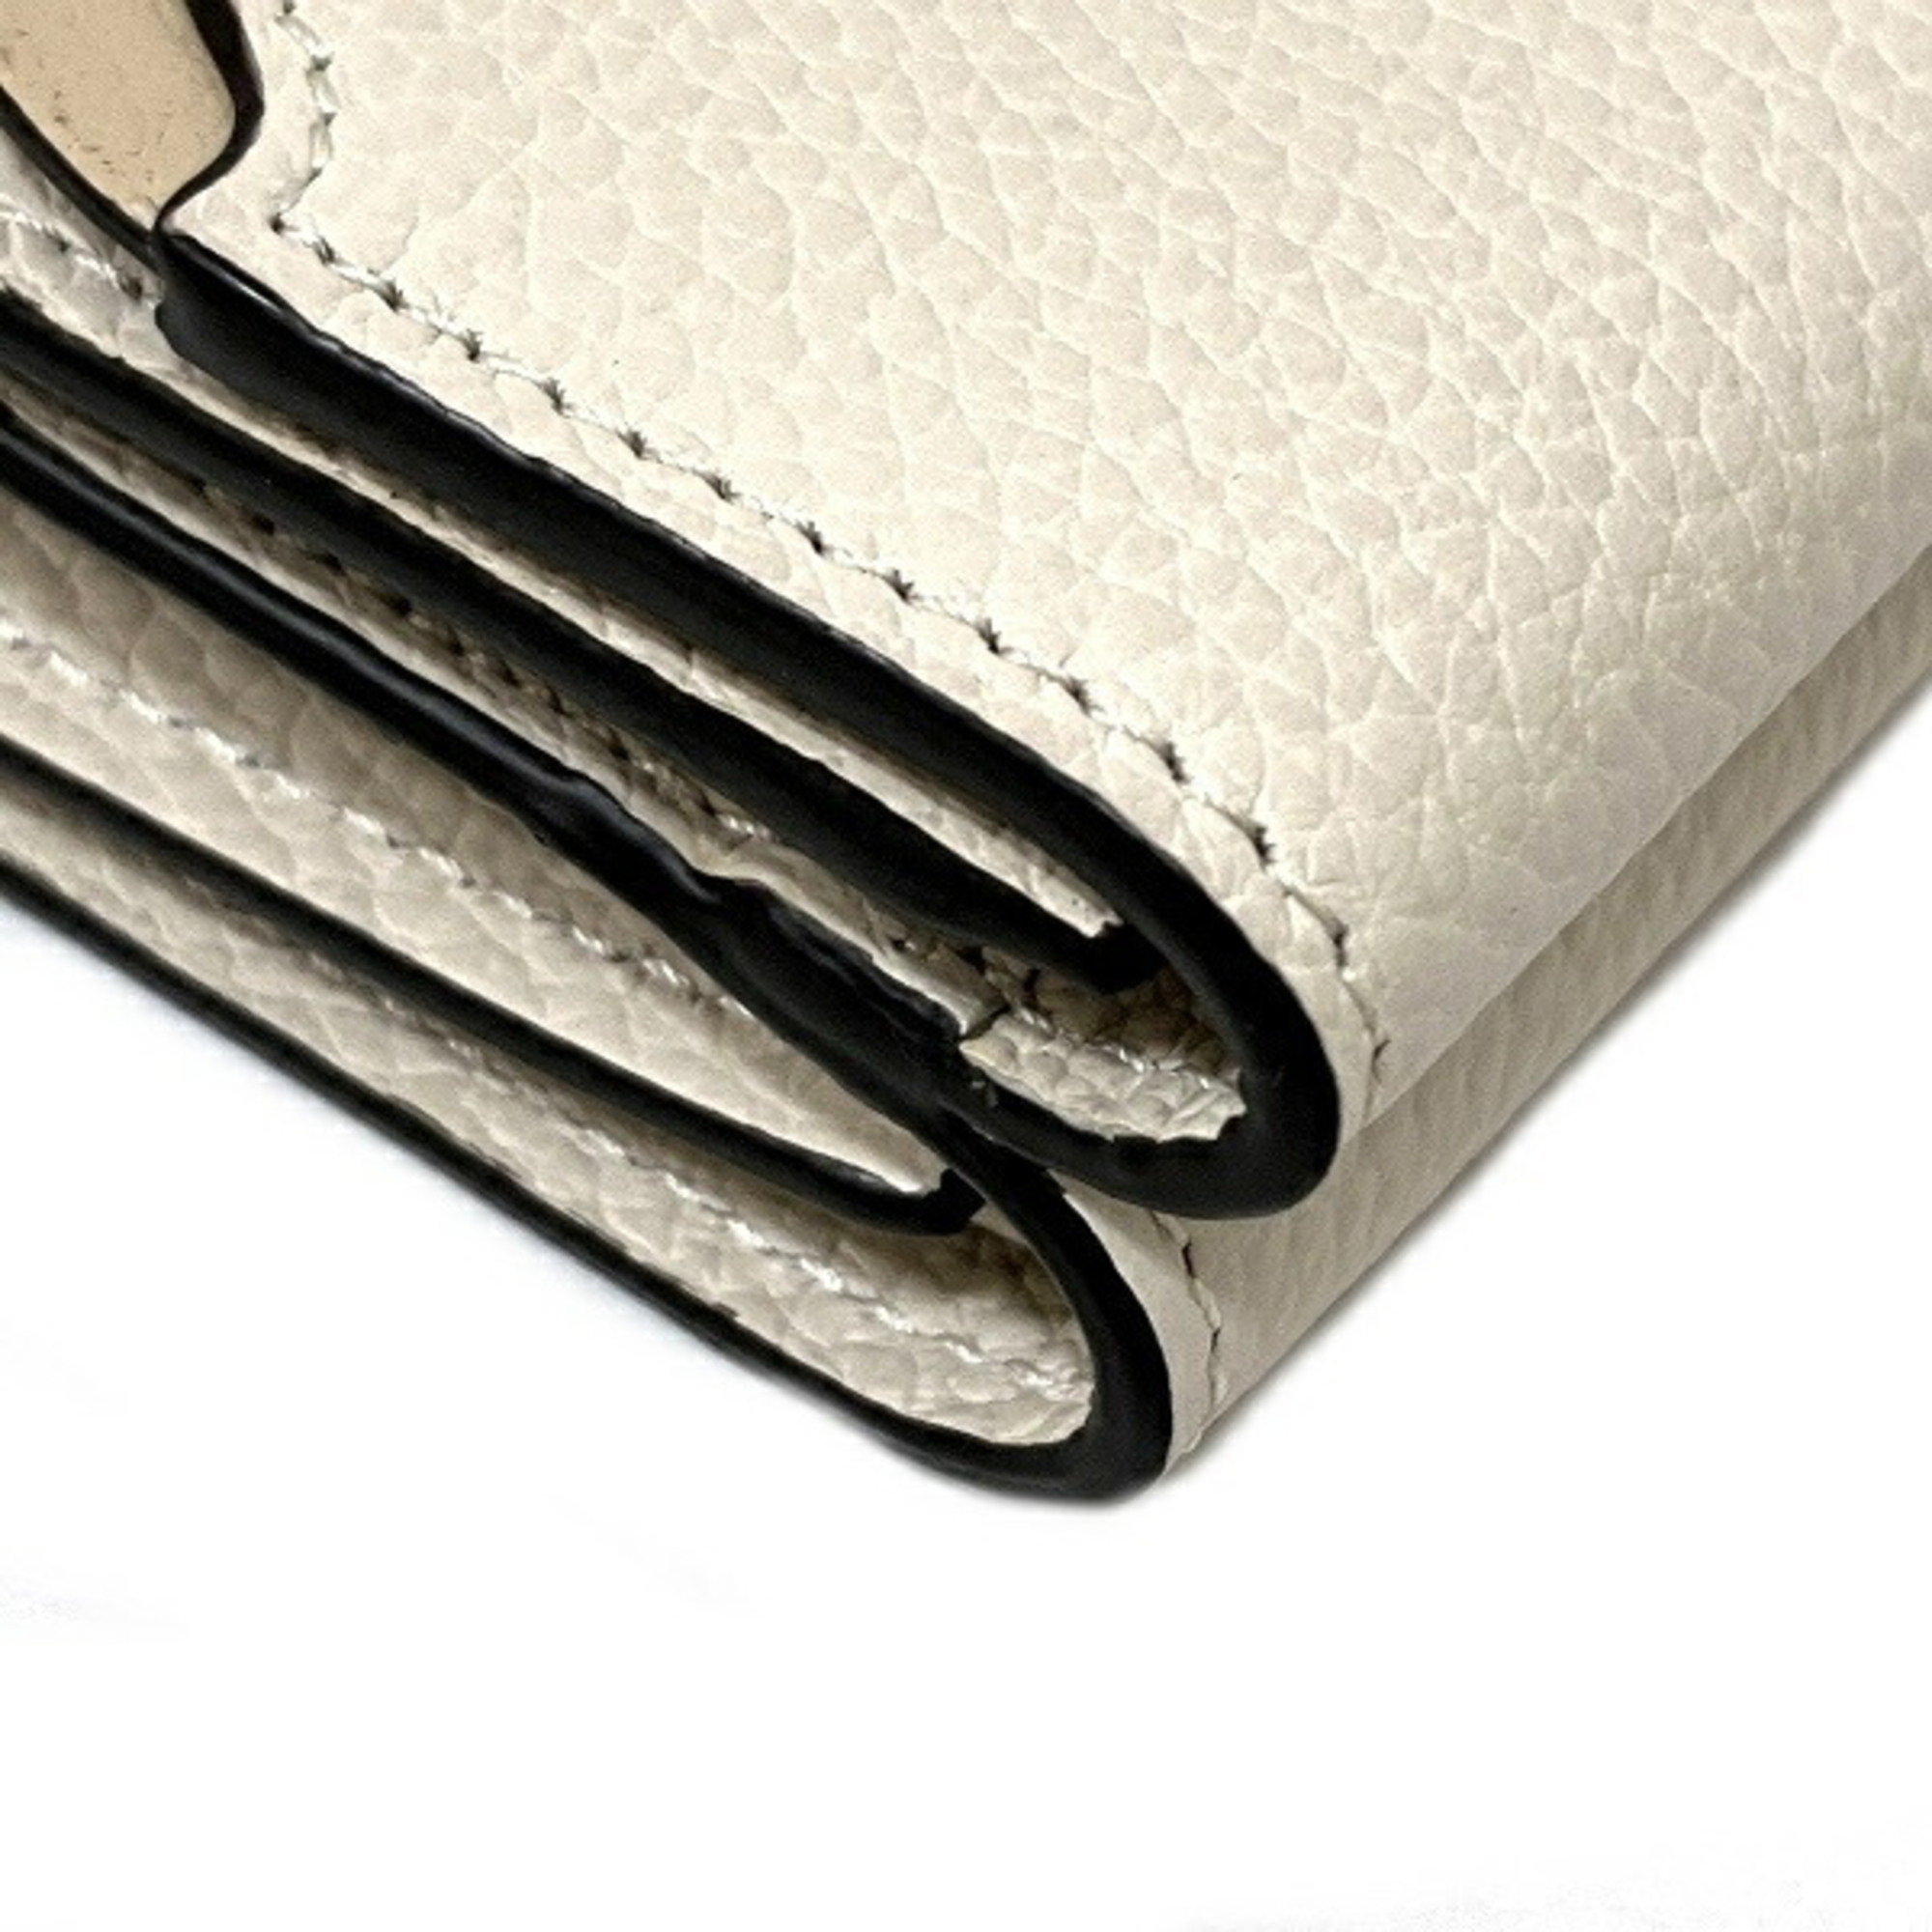 Chloé Chloe Ivory Leather Tri-fold Wallet for Women